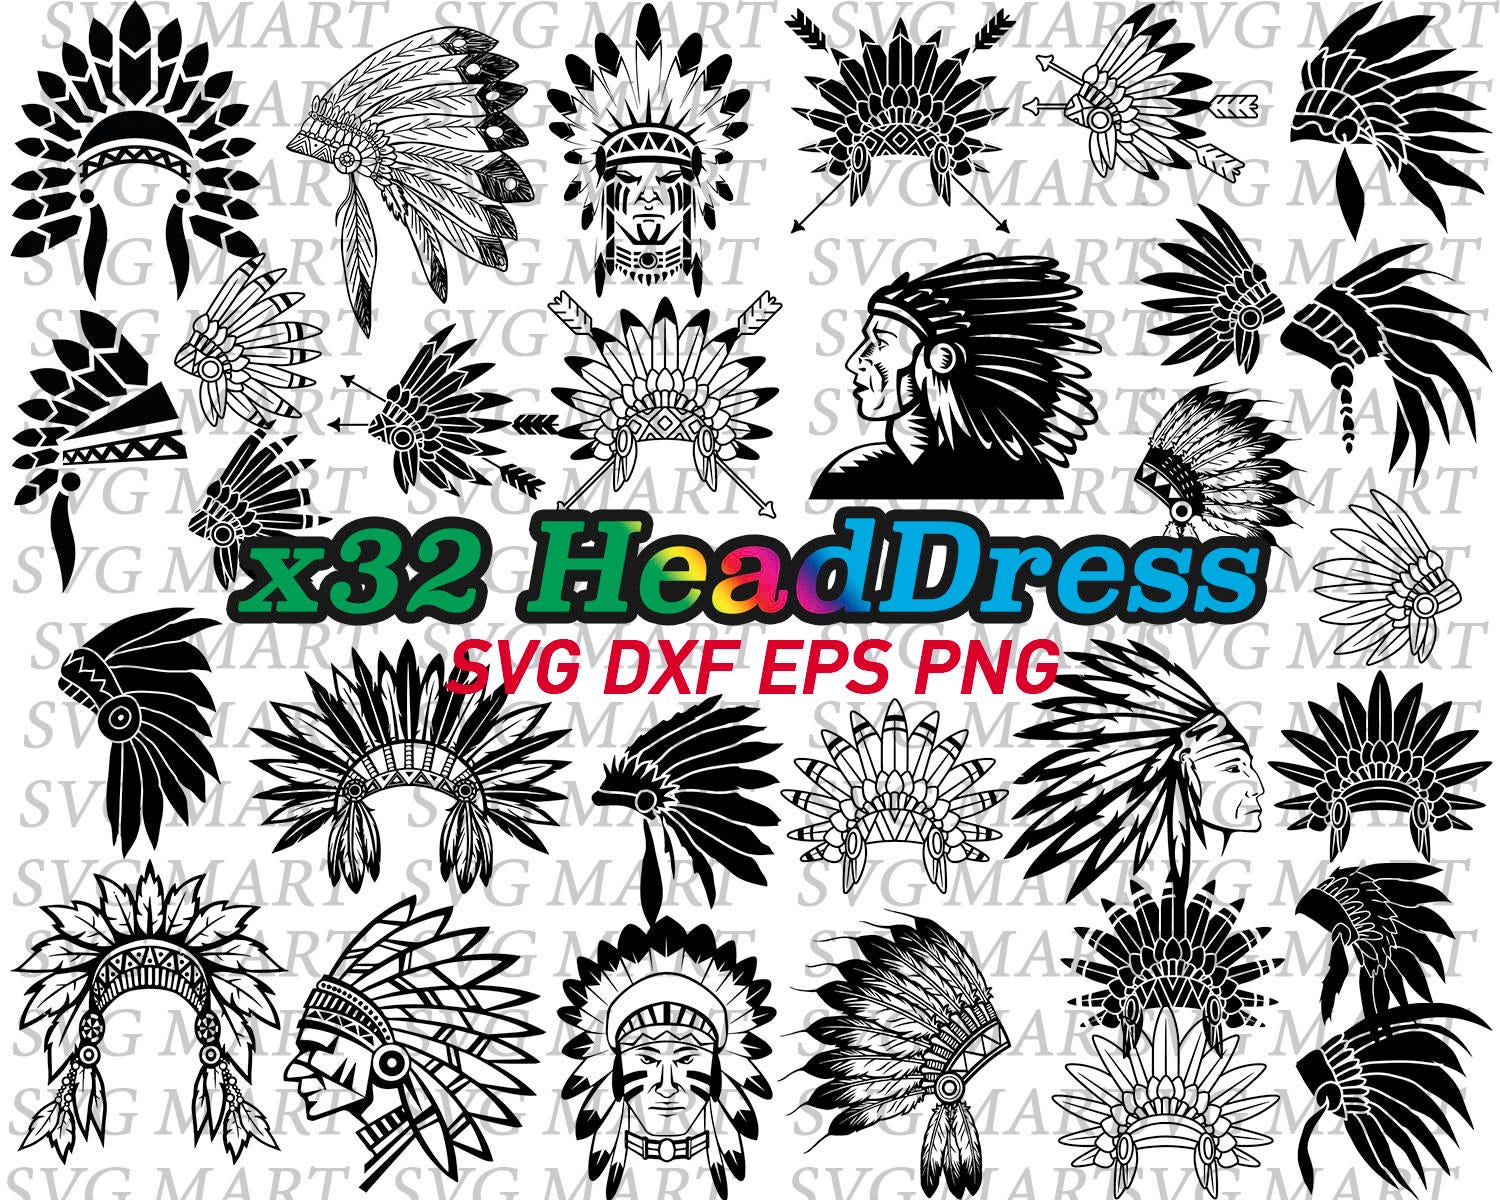 Download headdress svg native american indian headdress aztec tribe